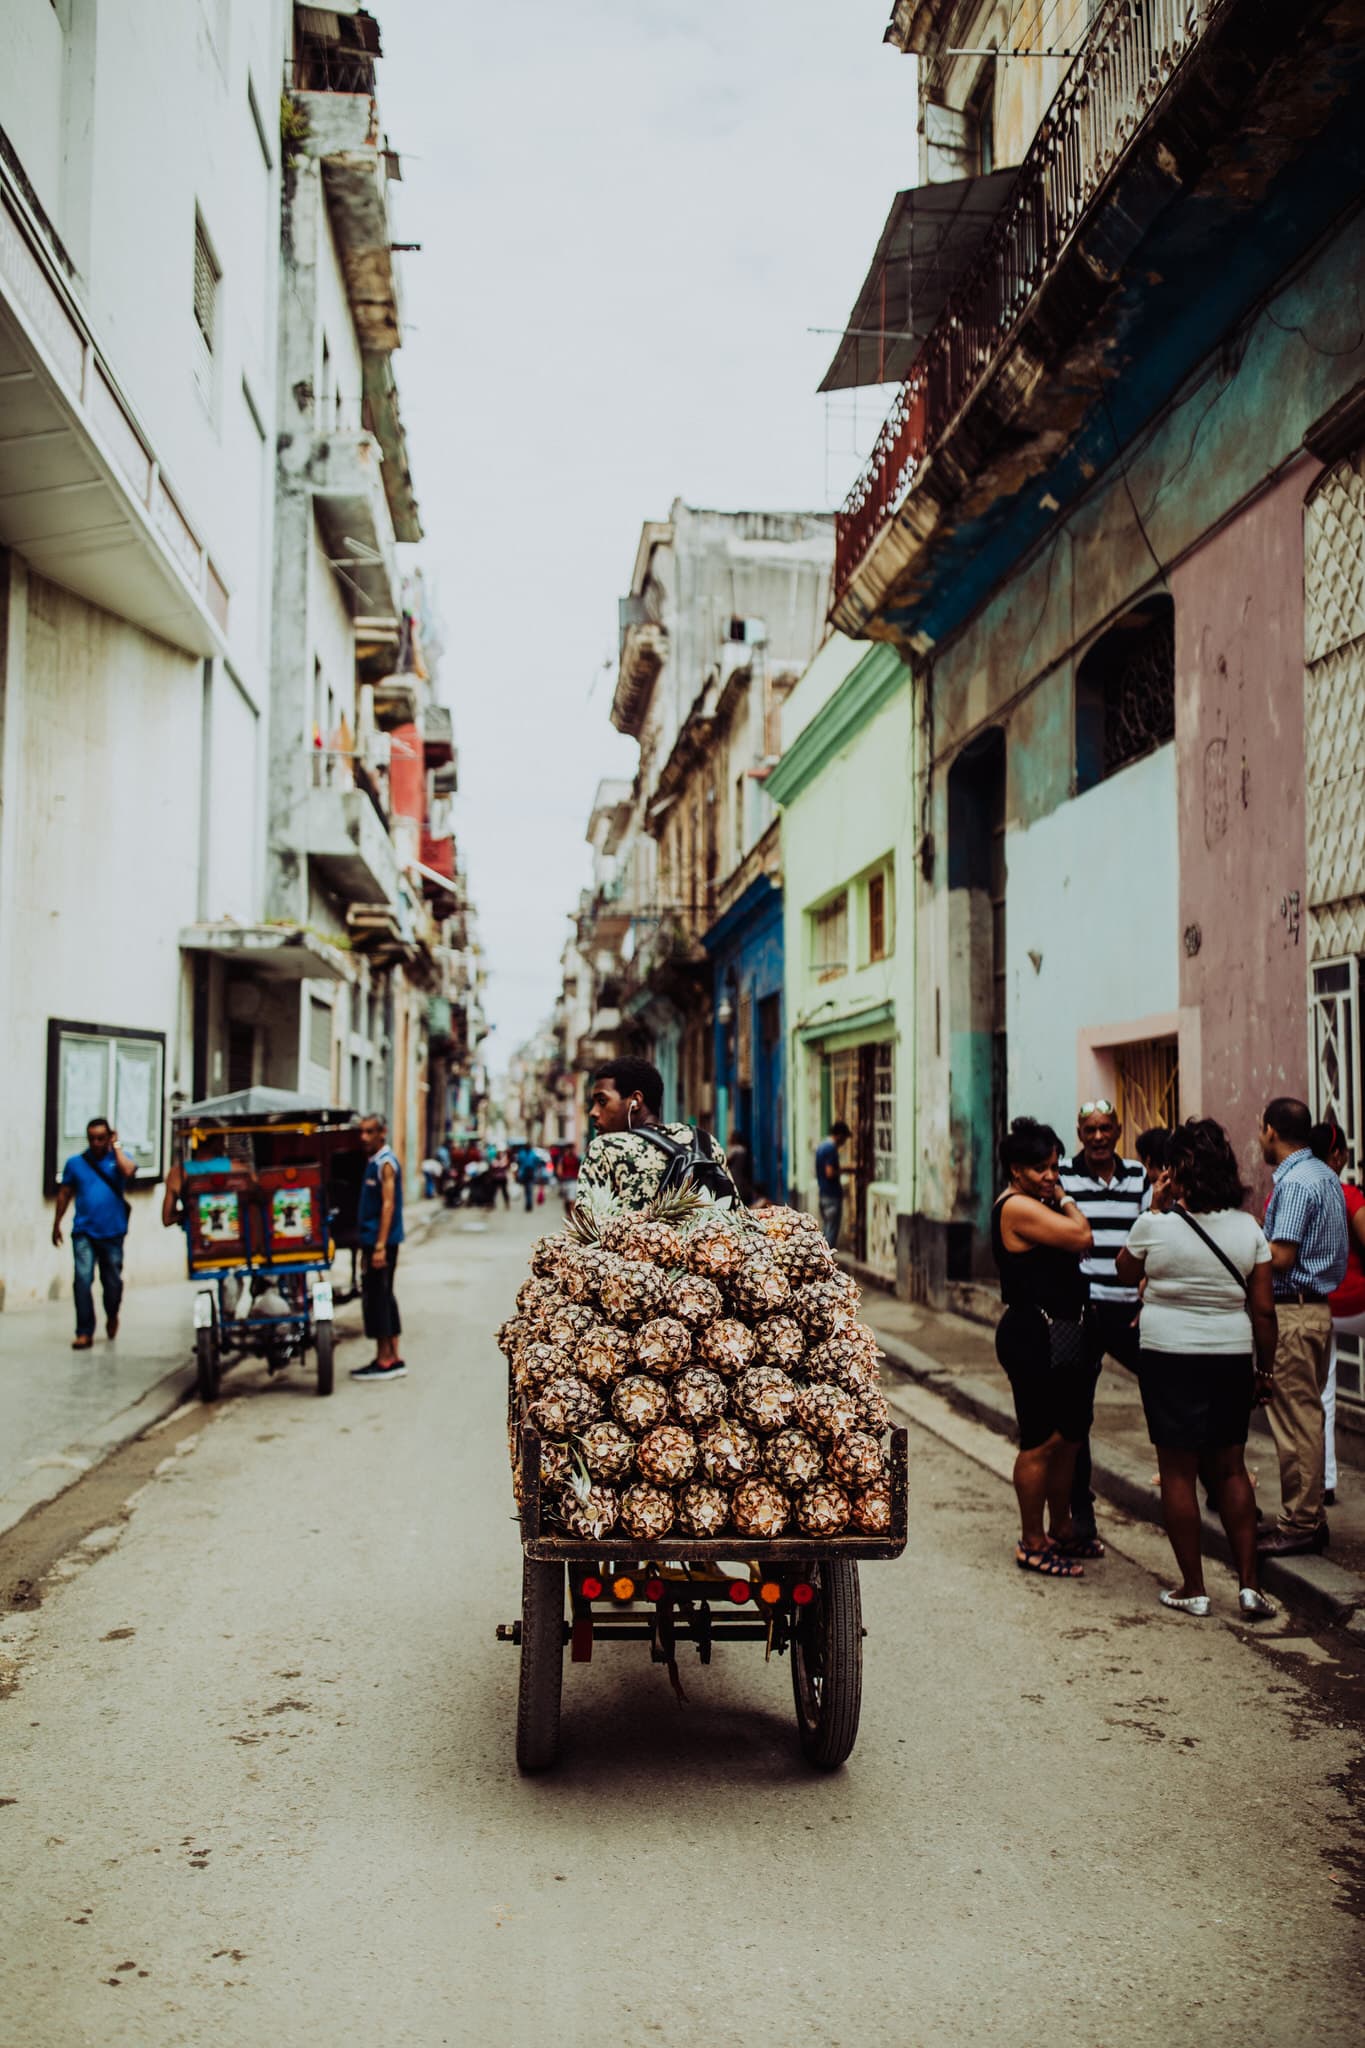 Pineapples in the streets of Havana